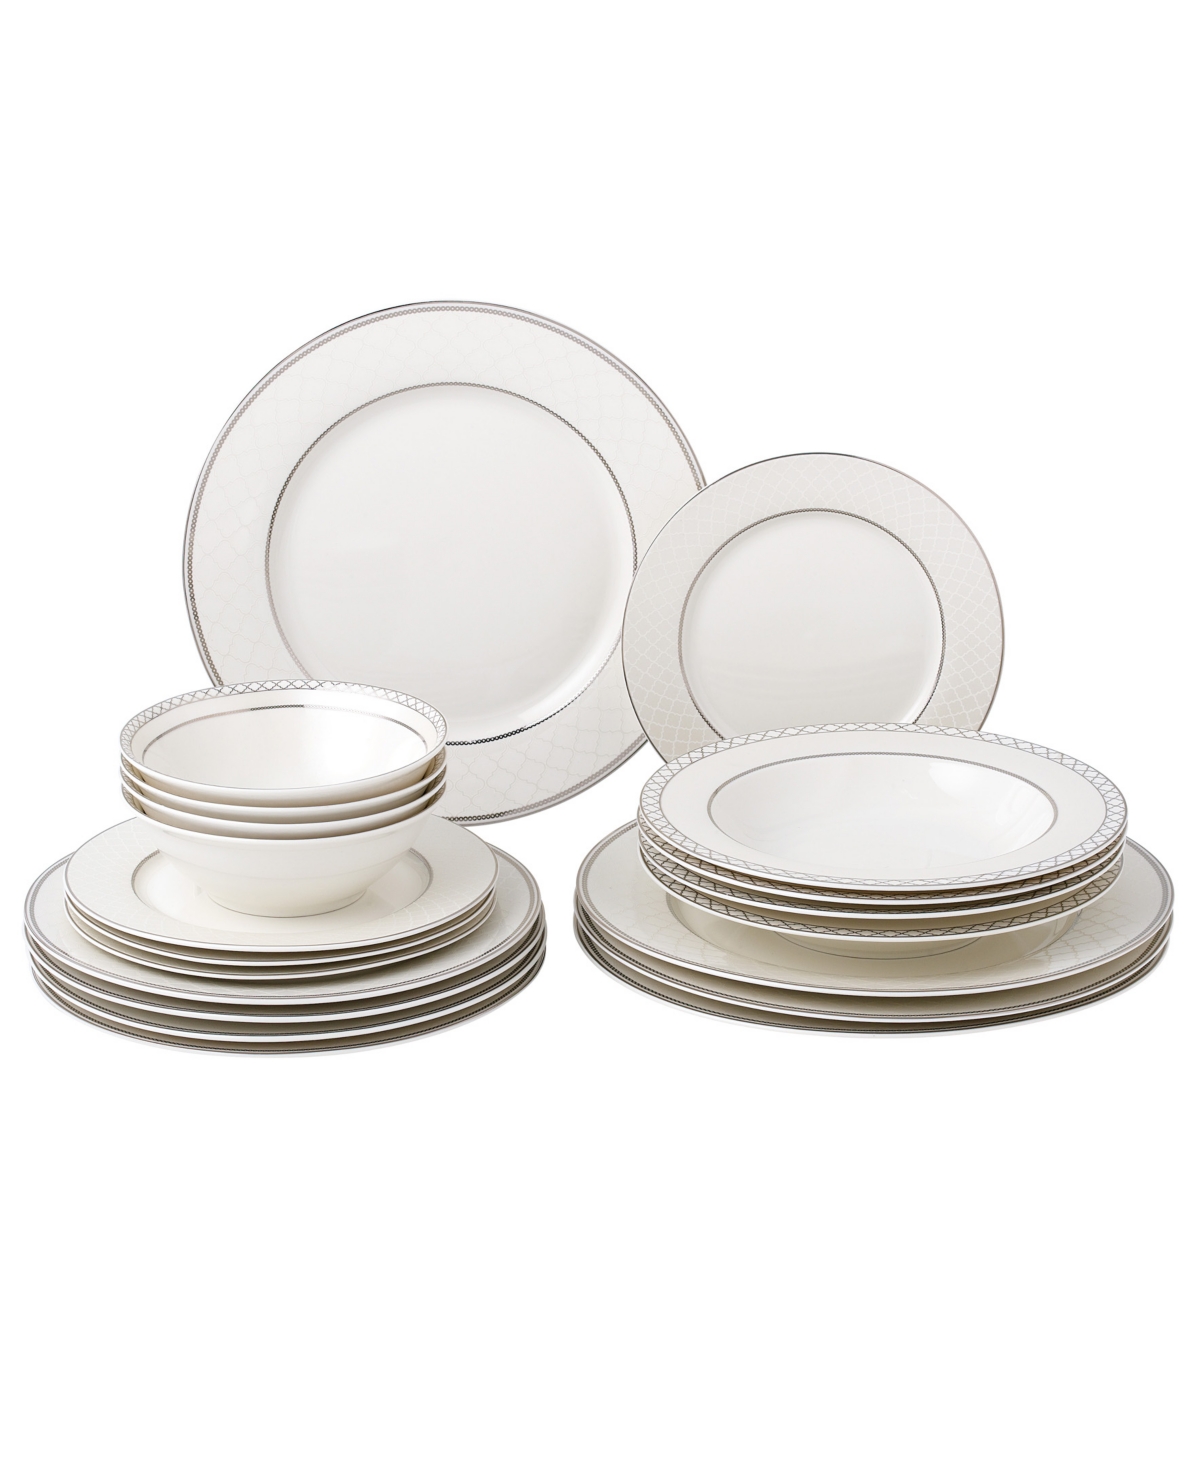 Lorren Home Trends 20 Piece Service For 4 Dinnerware Set In Silver